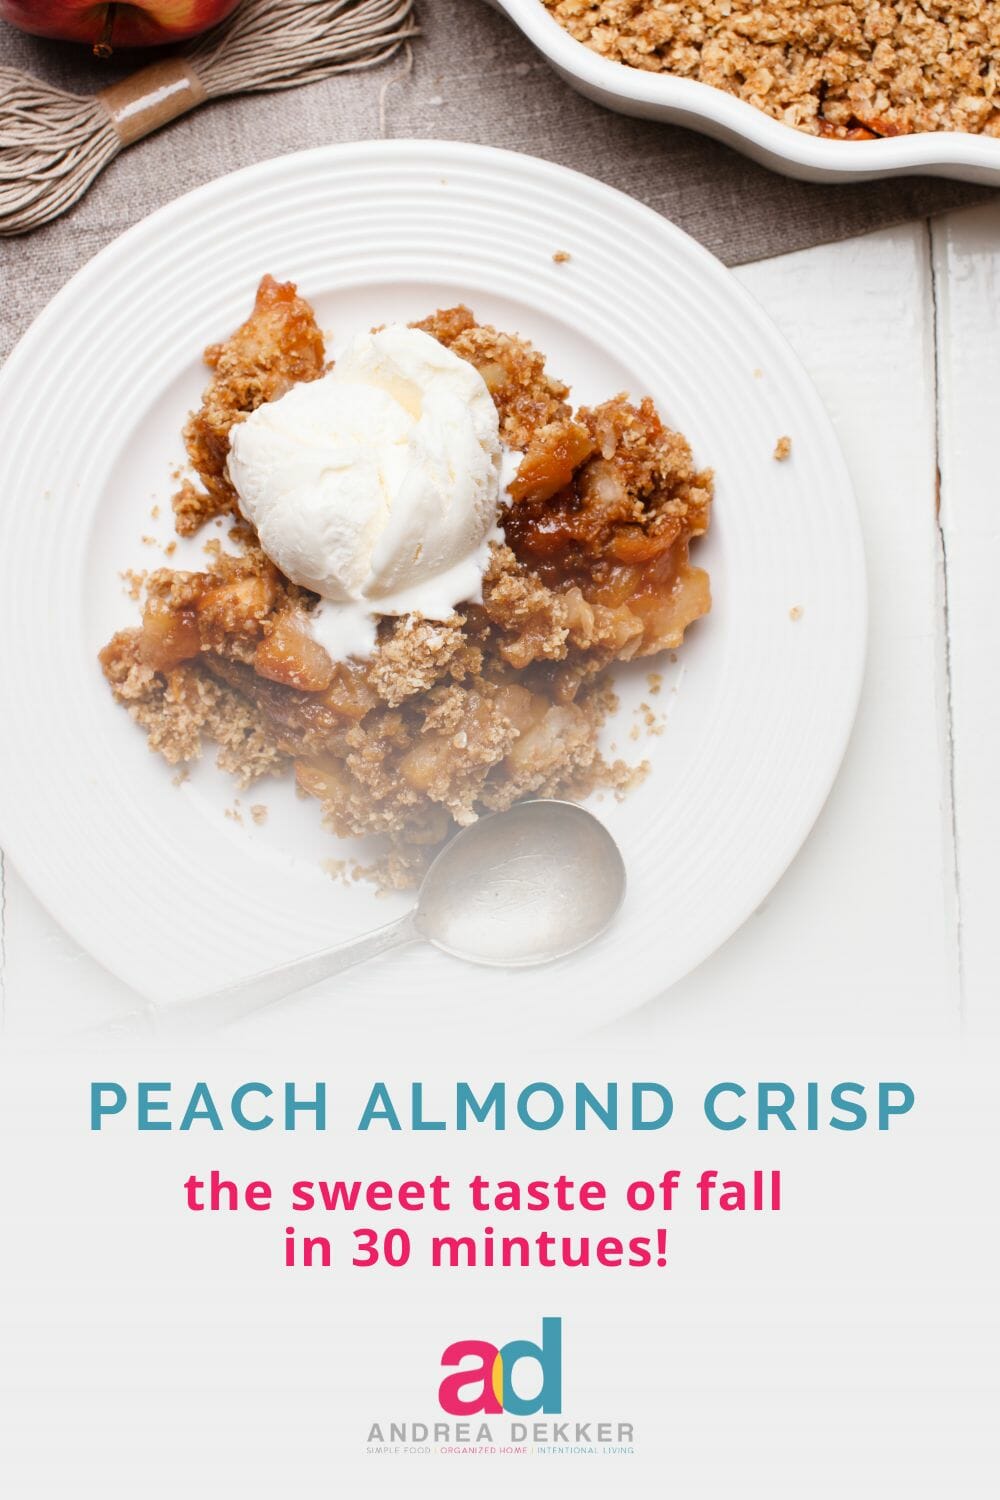 Peach almond crisp is my family's favorite peach dessert. I hope your family enjoys this simple, sweet taste of fall around your kitchen table too! via @andreadekker